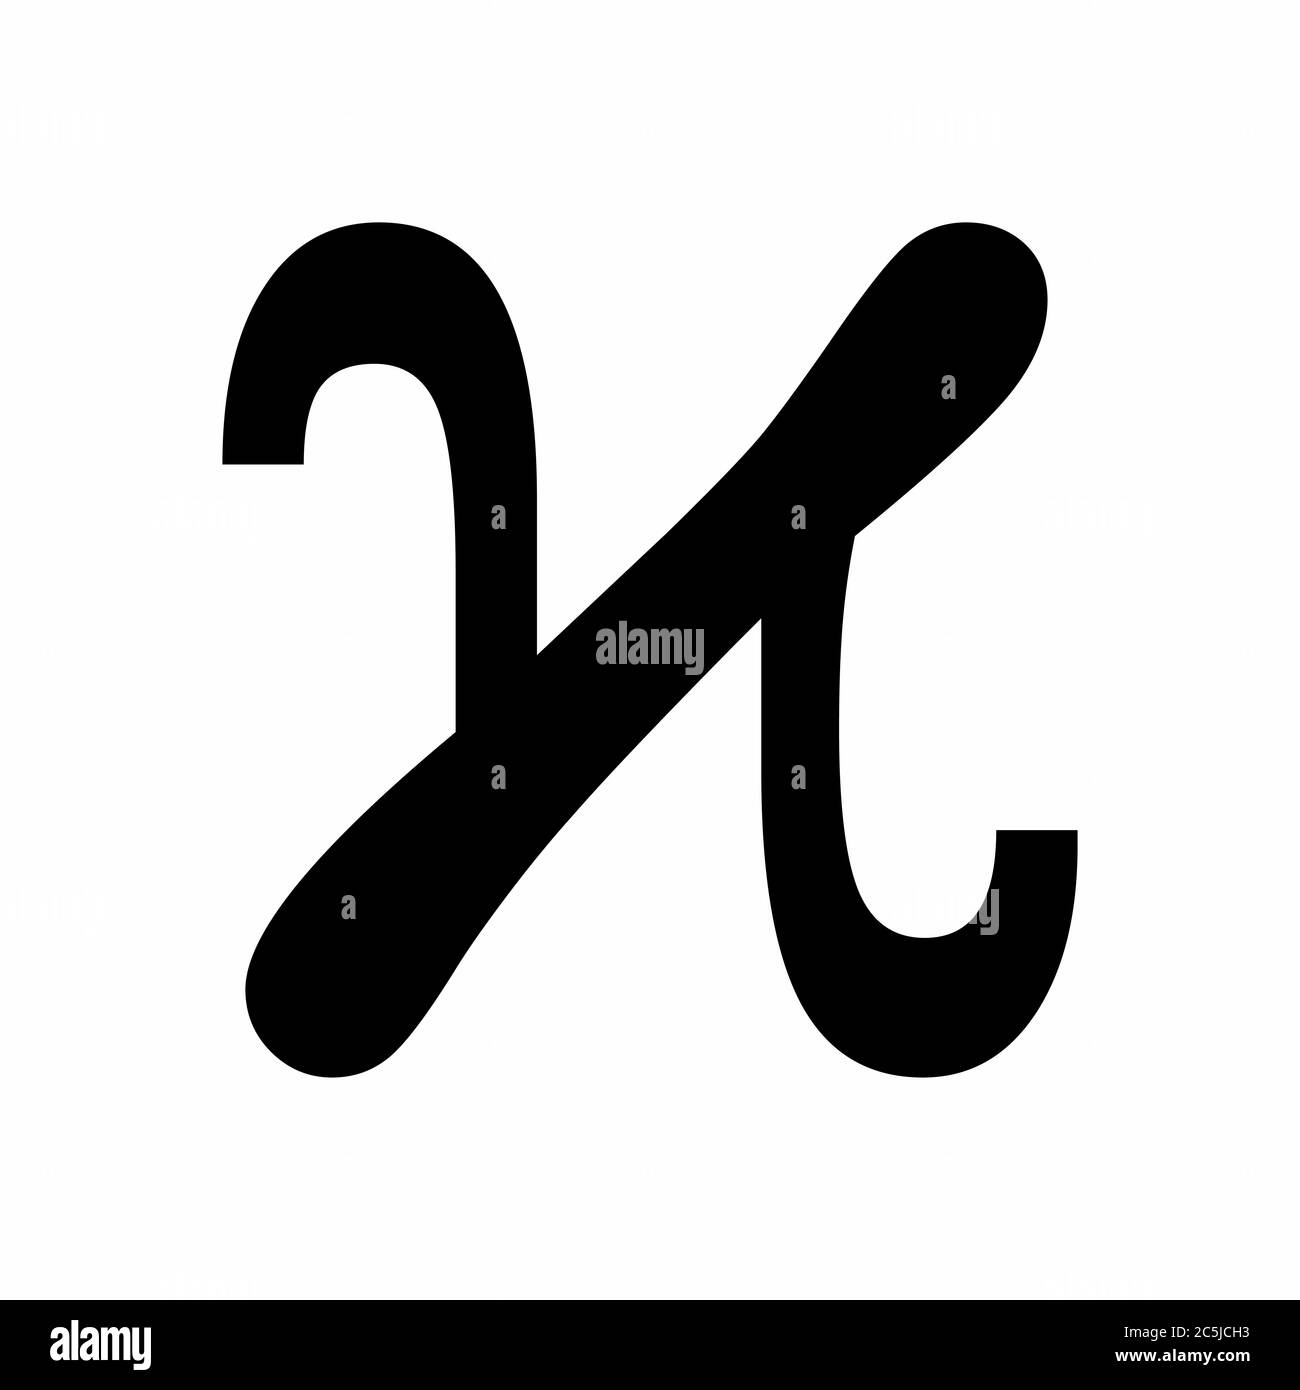 Kappa variant greek letter icon Stock Vector Image & Art - Alamy